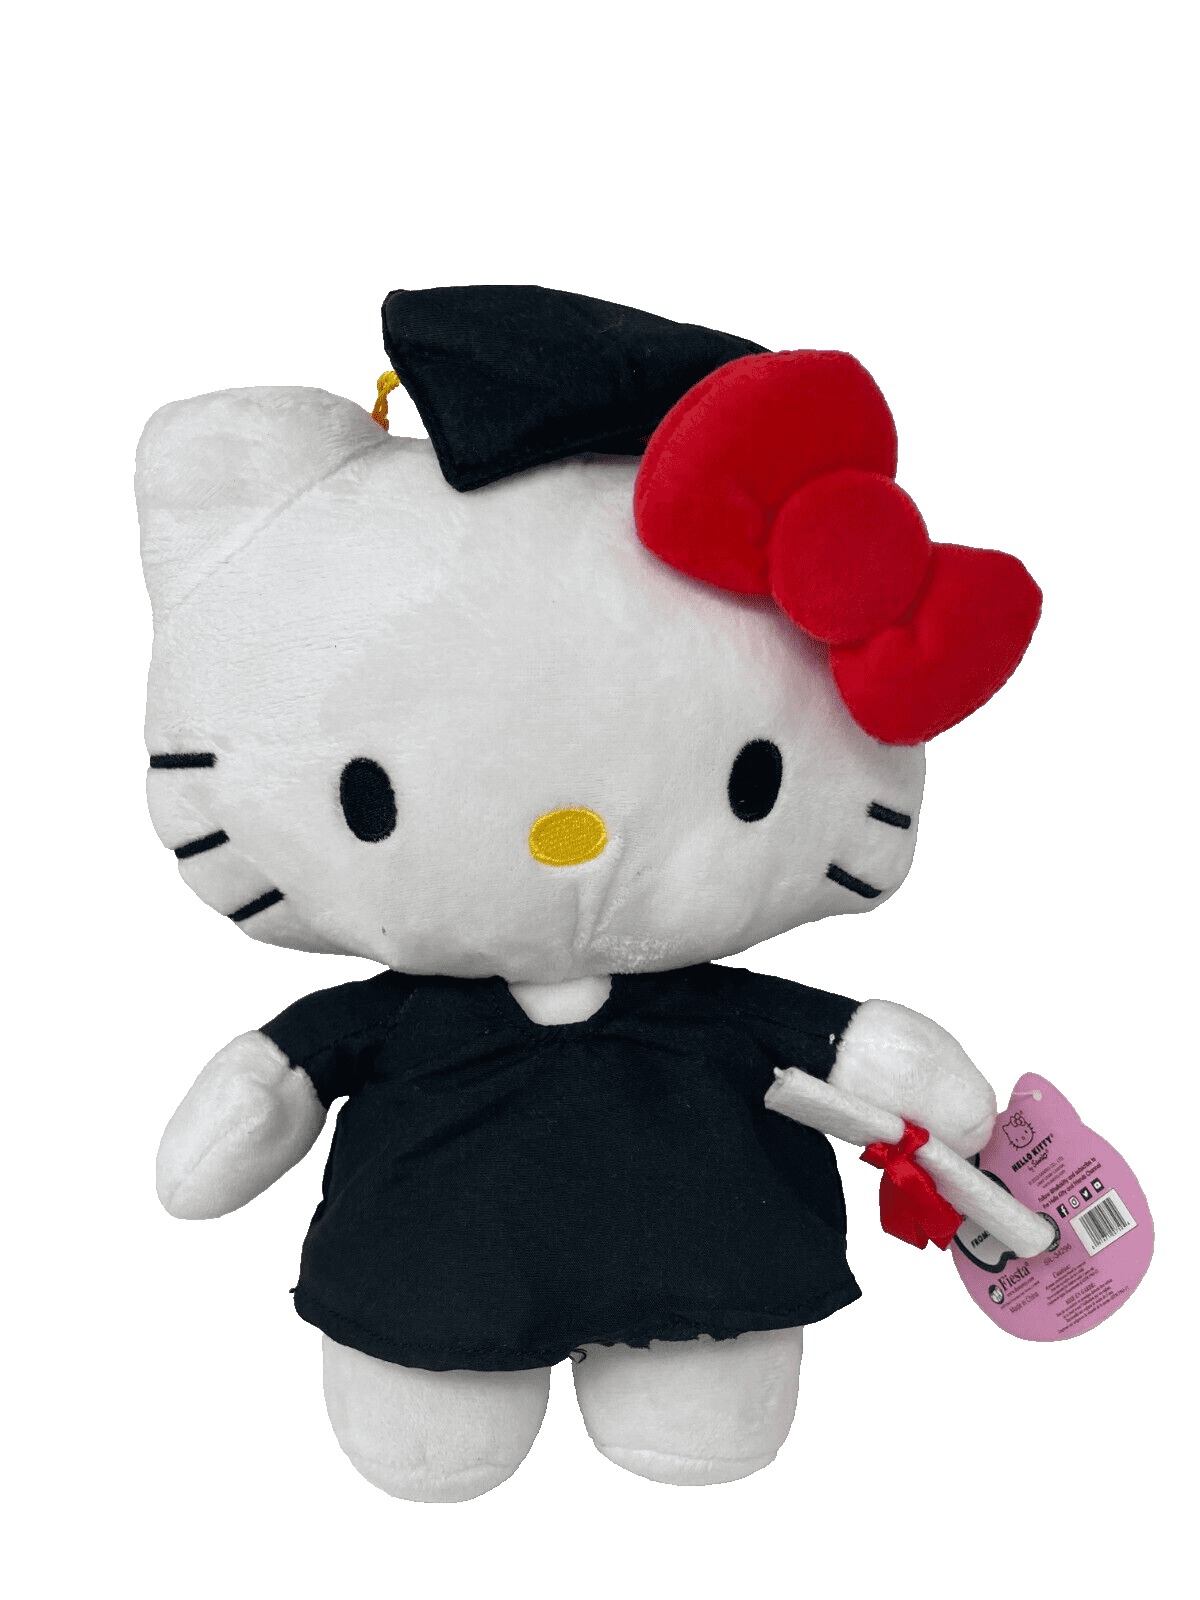 Licensed Graduation Hello Kitty Plush, 11 inches 